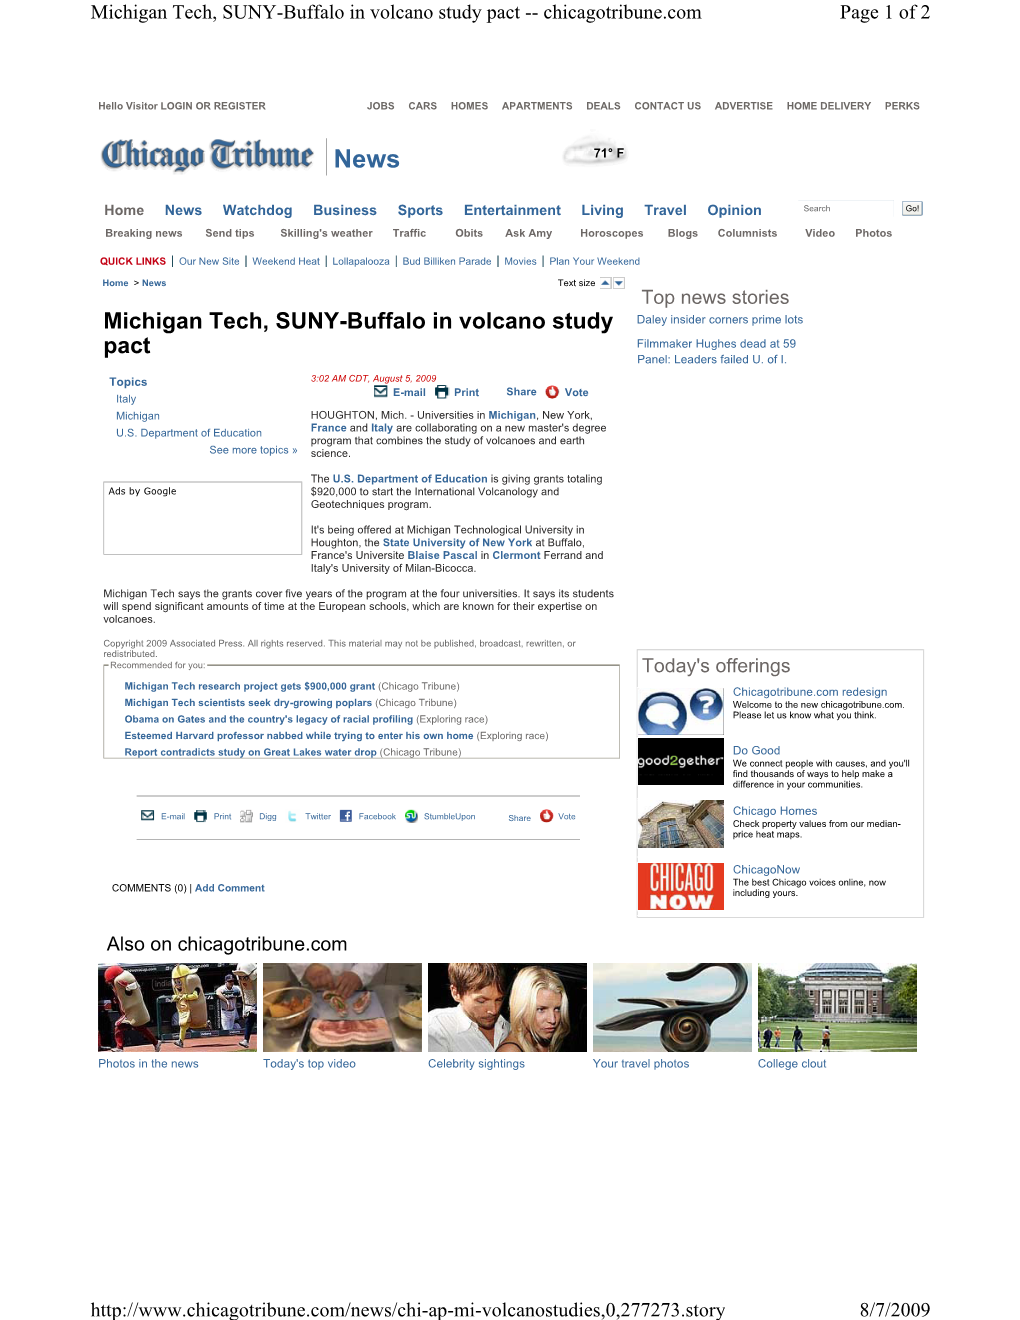 Michigan Tech, SUNY-Buffalo in Volcano Study Pact -- Chicagotribune.Com Page 1 of 2